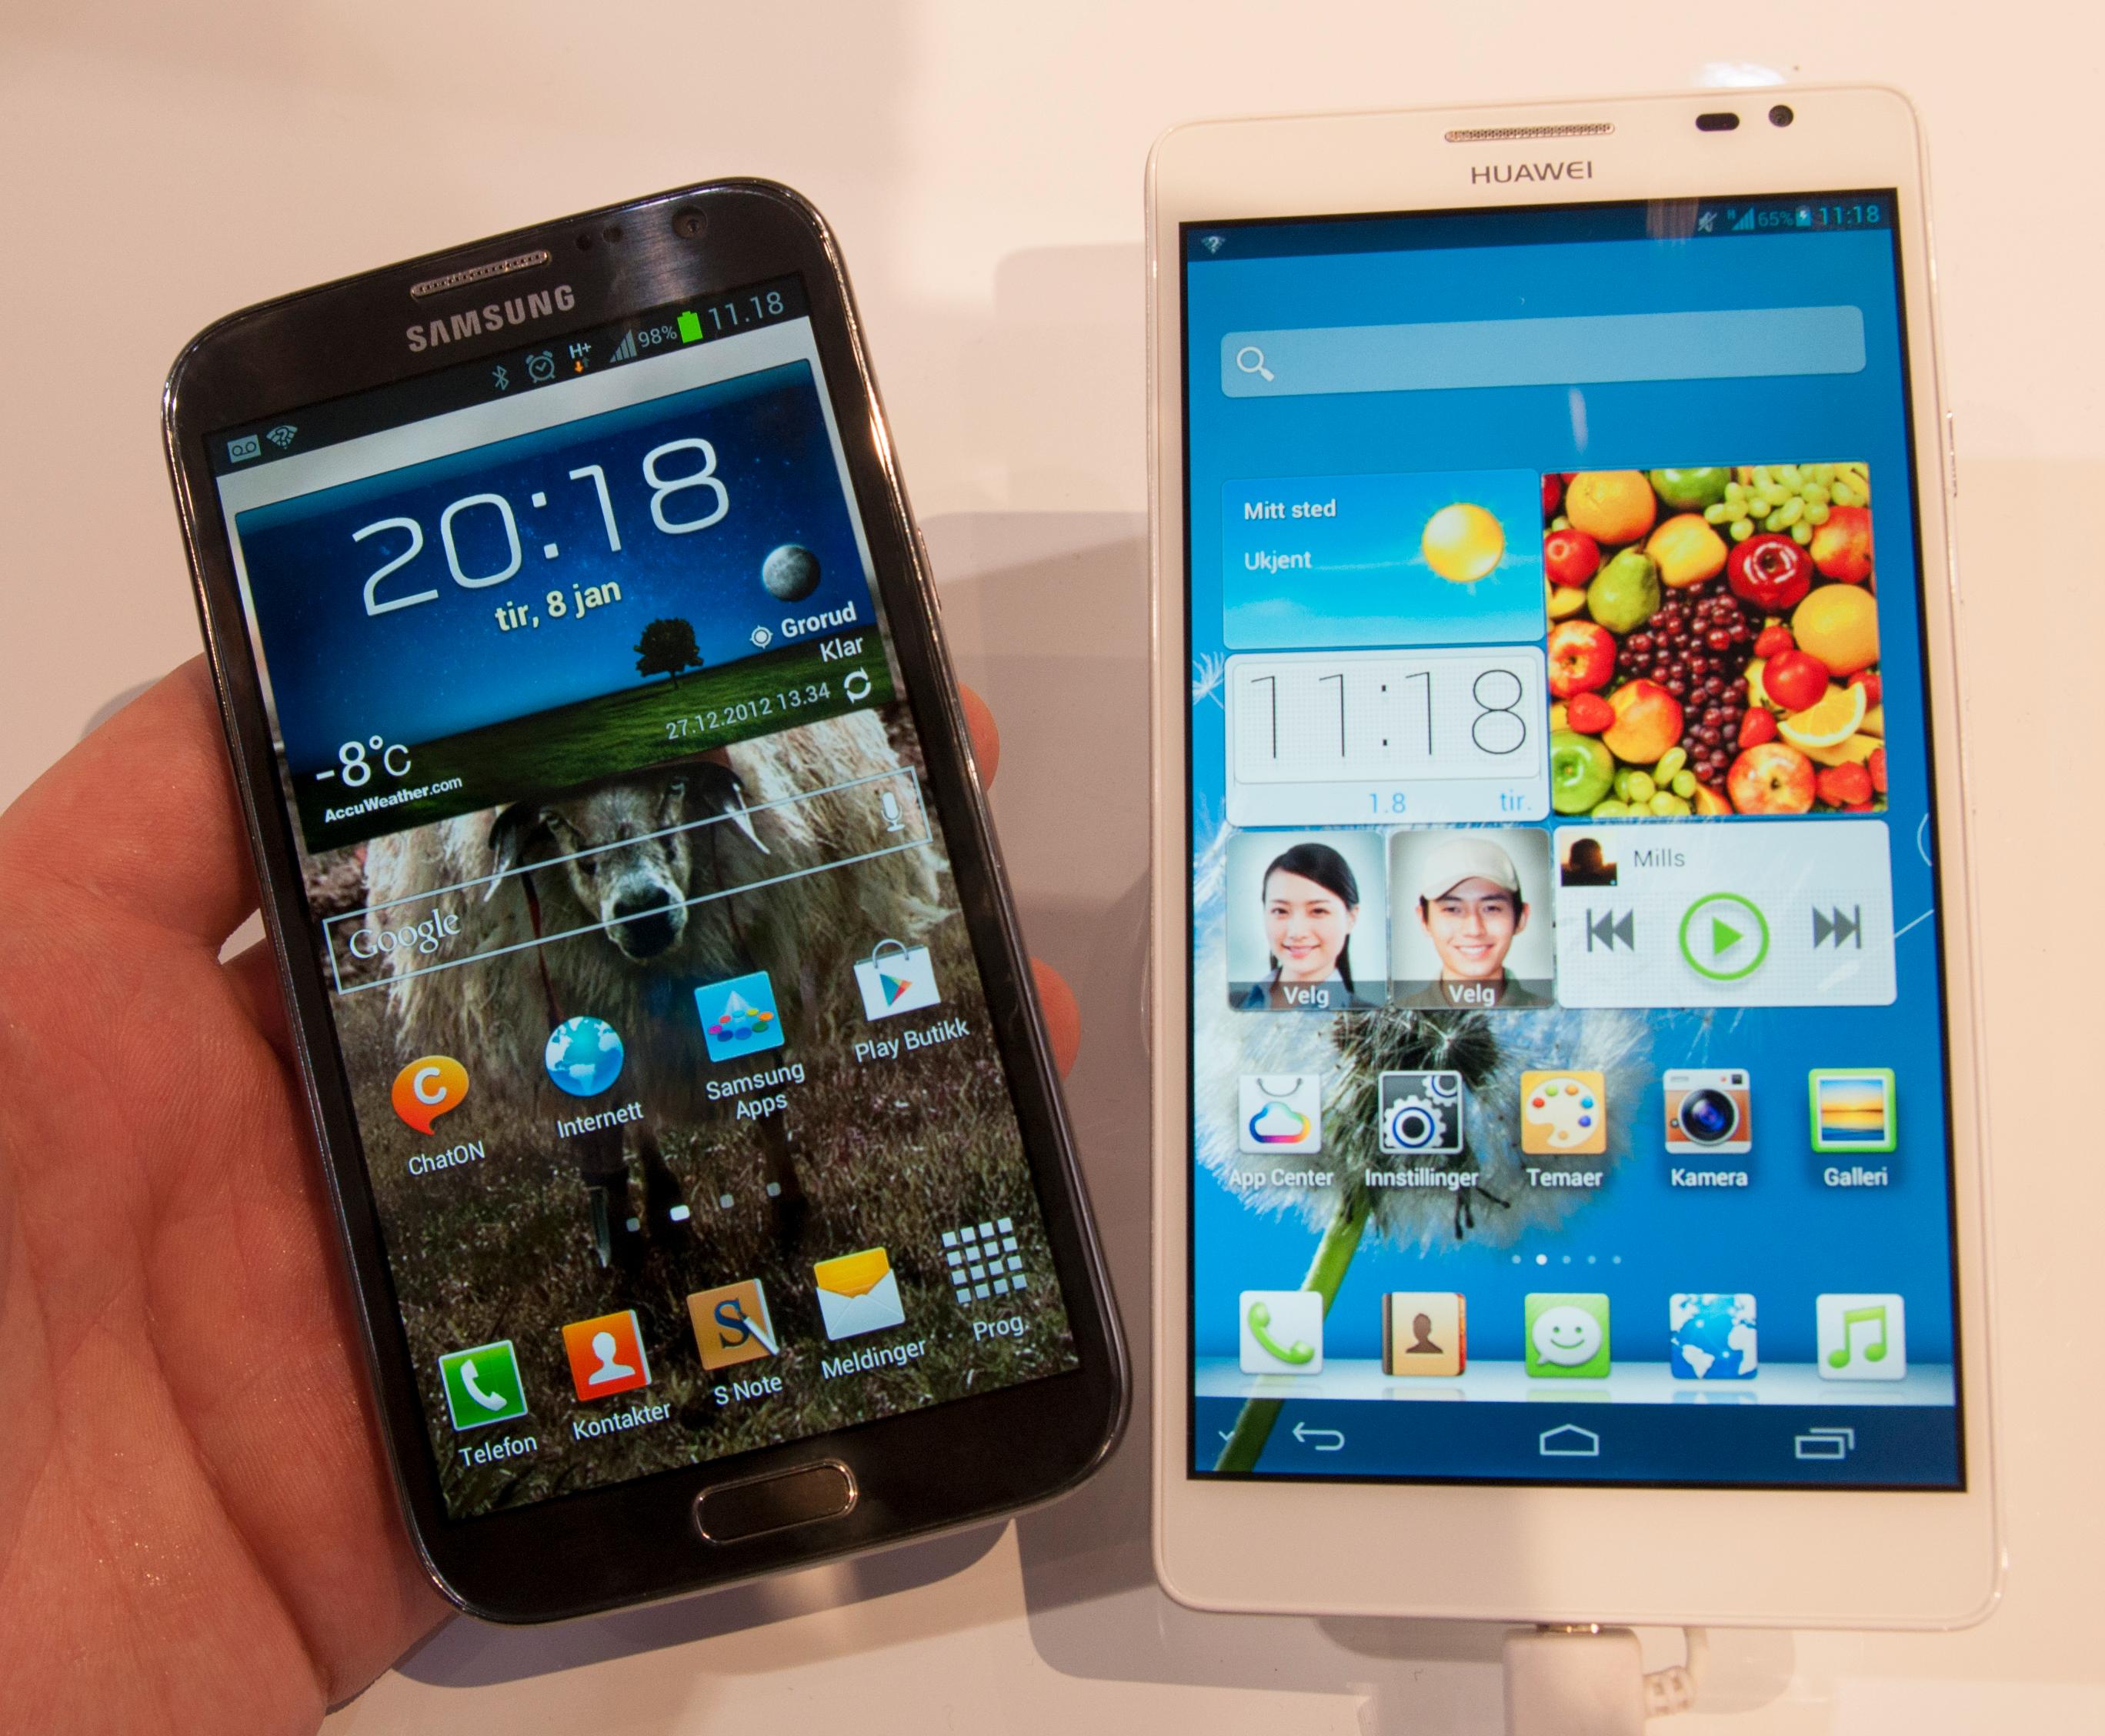 Huawei Ascend Mate har 0,6 tommer større skjerm enn Samsungs Galaxy Note II.Foto: Finn Jarle Kvalheim, Amobil.no